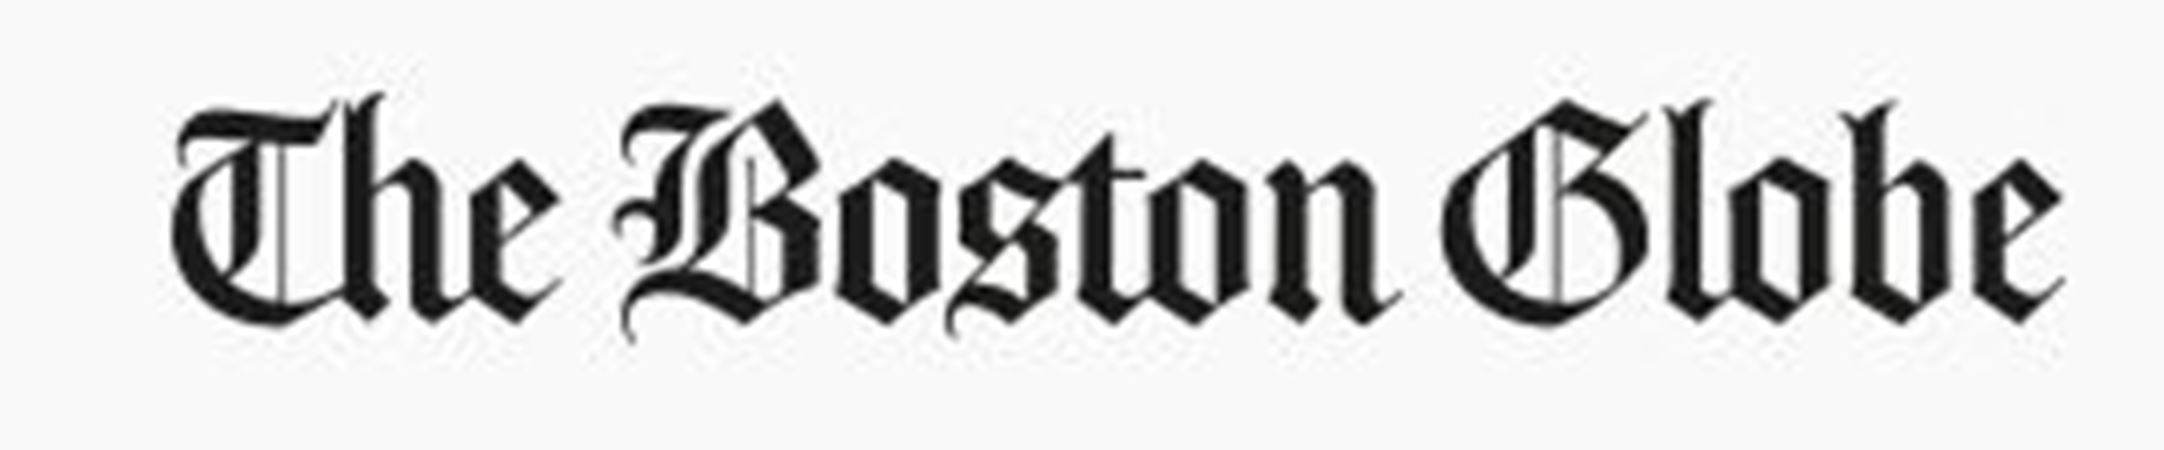 Boston Globe Logo